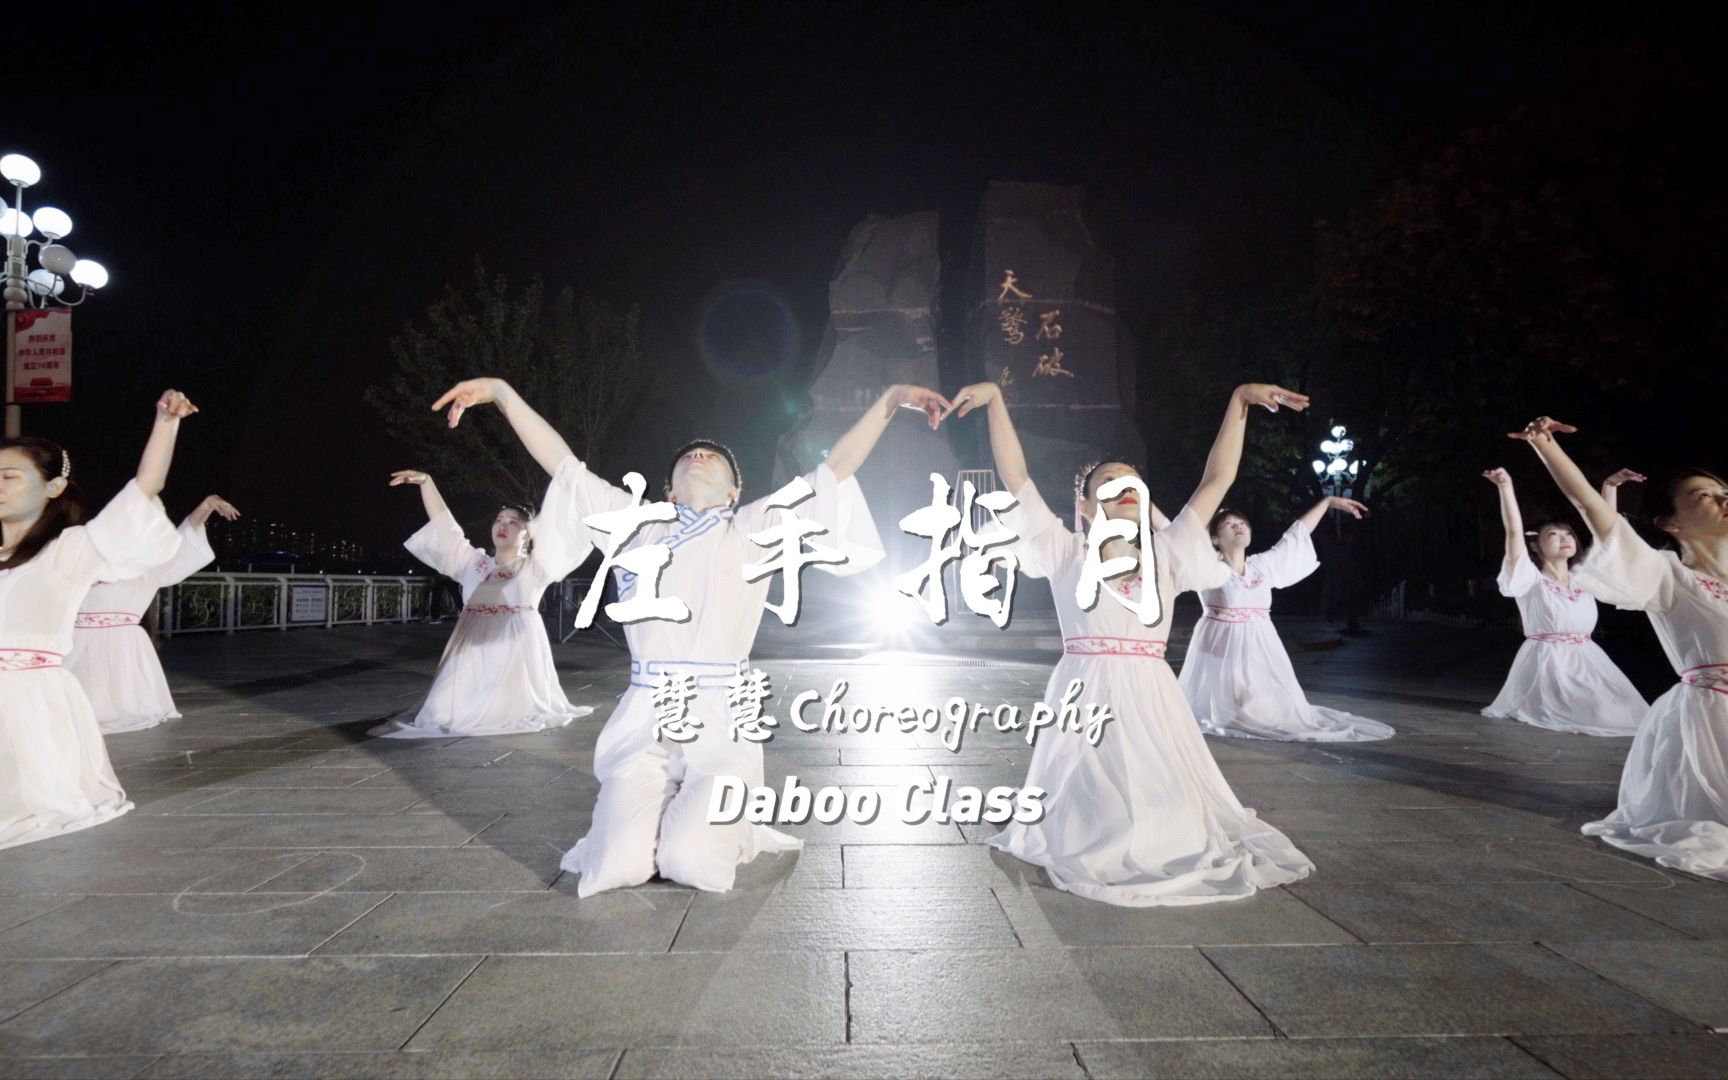 【RealHeart】Daboo Class 学员展示中国风舞蹈《左手指月》